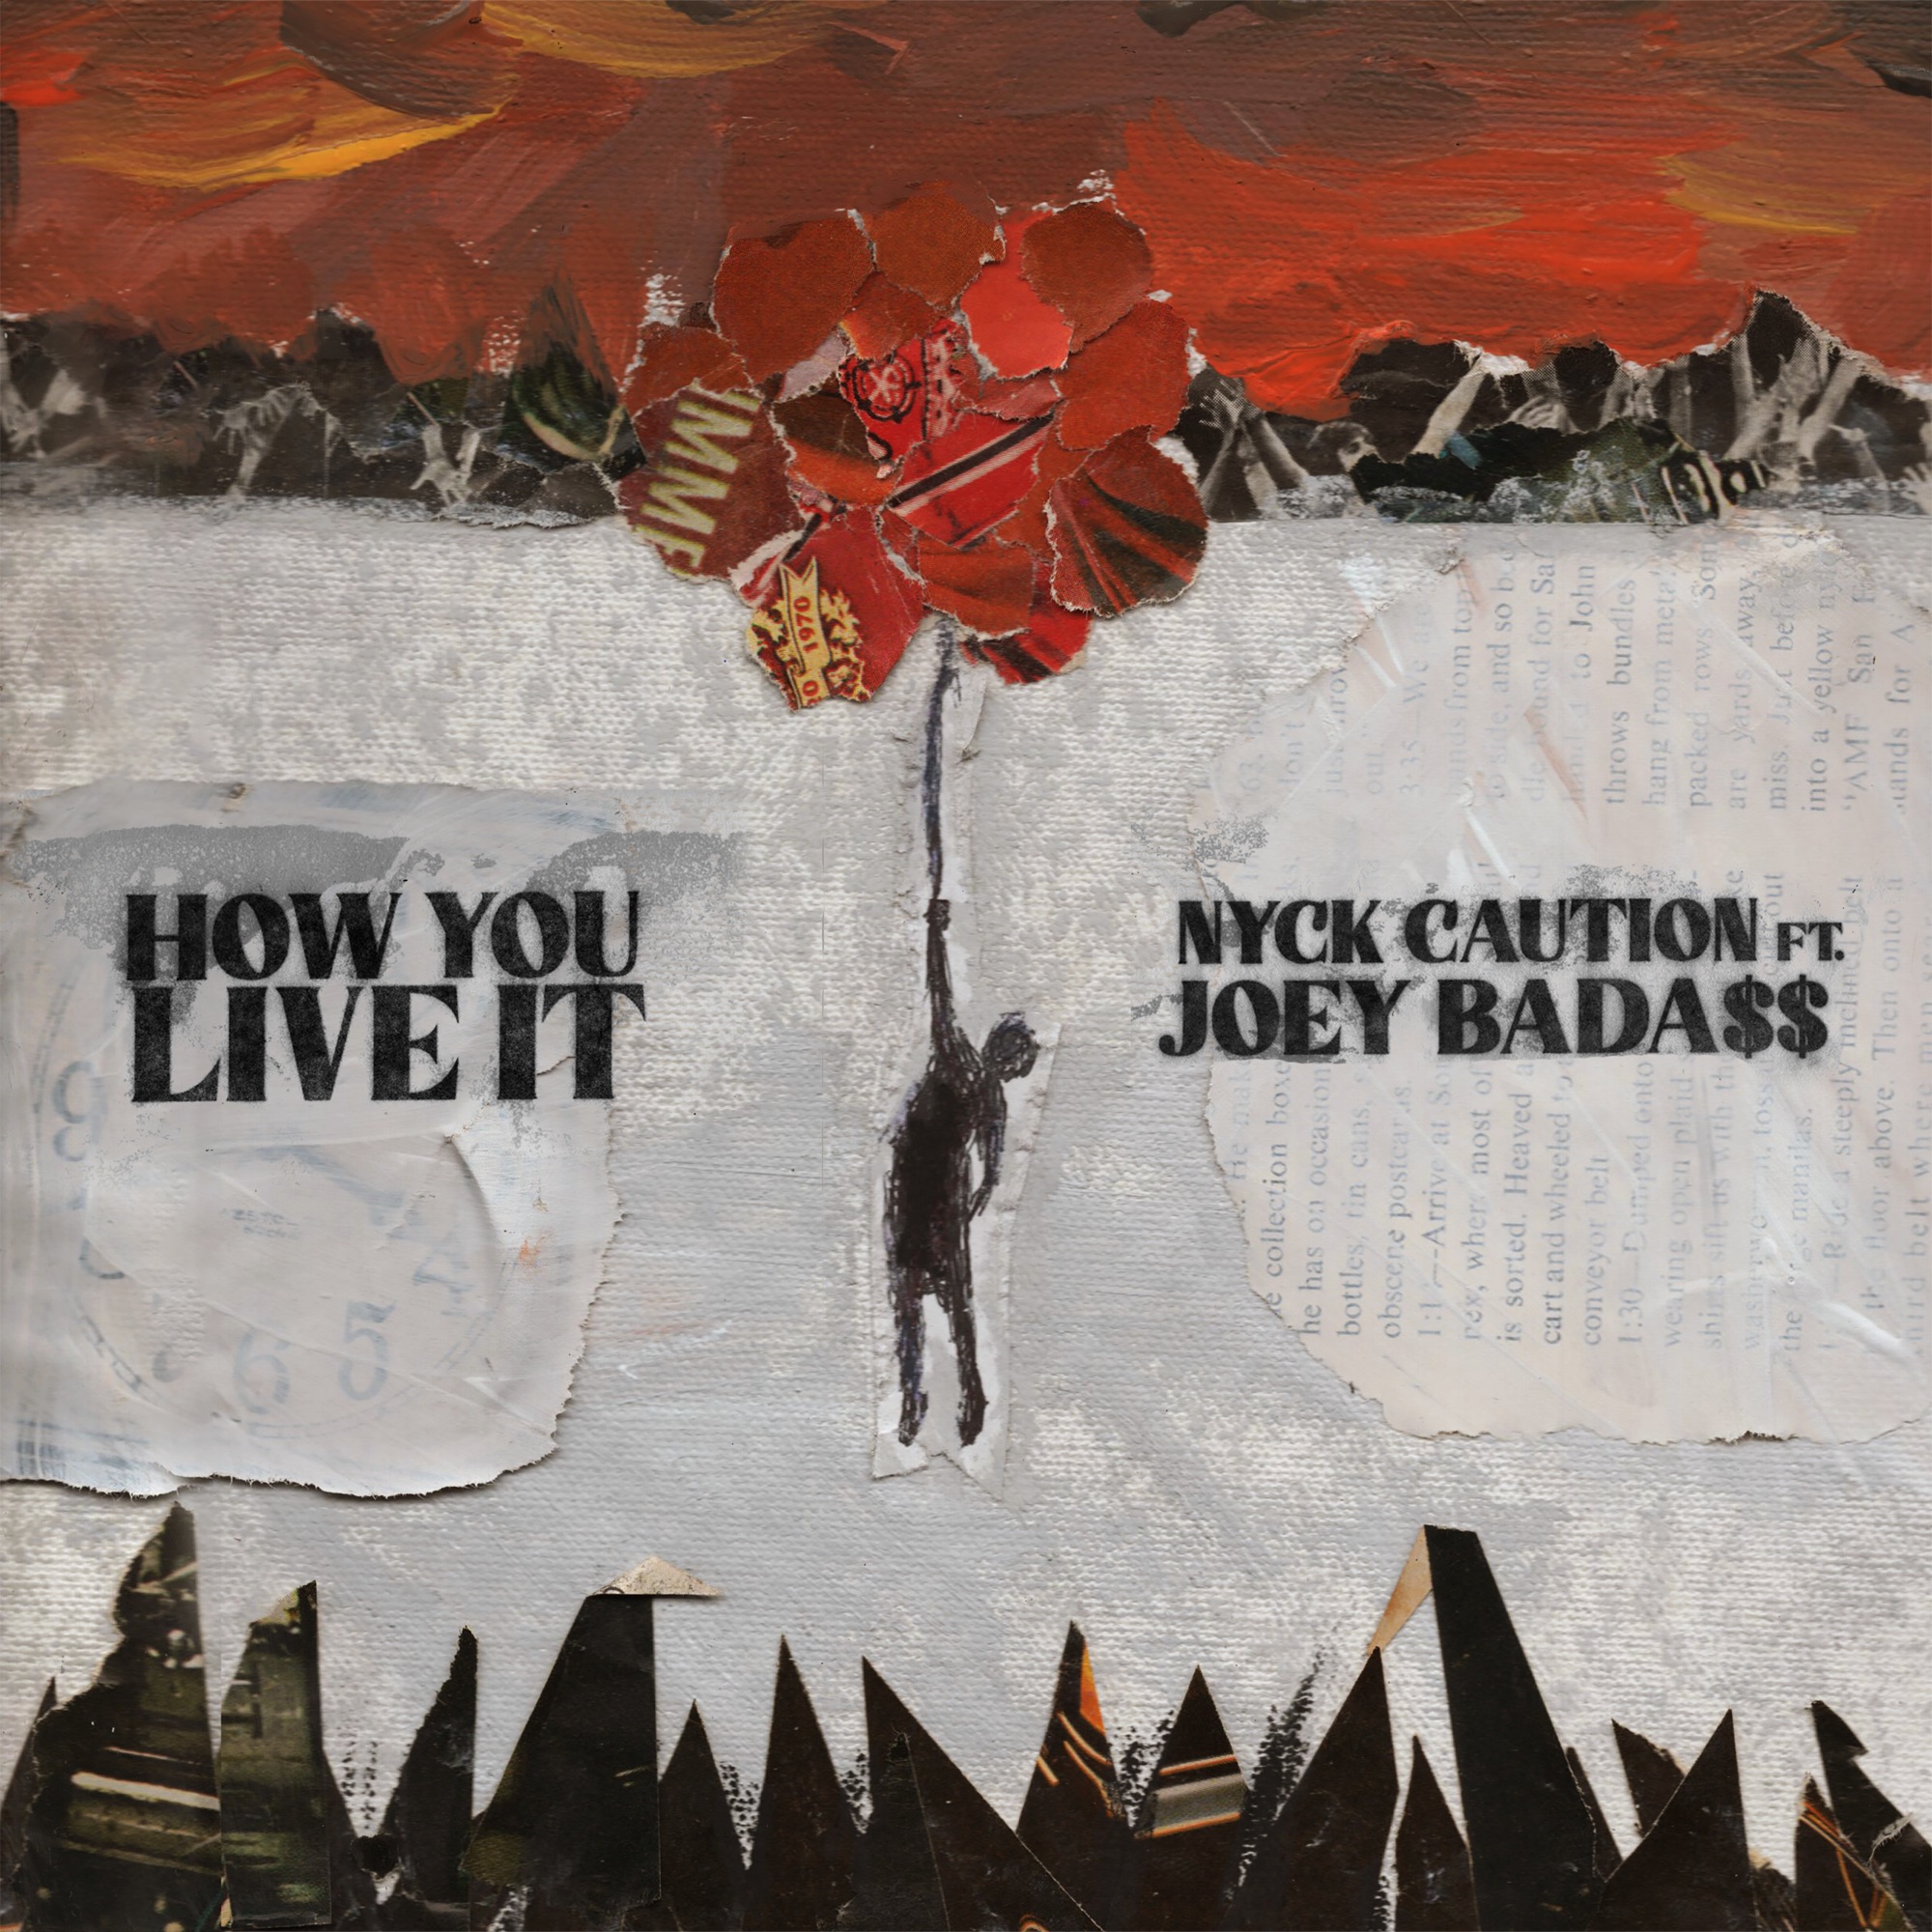 Nyck Caution - How You Live It (feat. Joey Bada$$) - Single